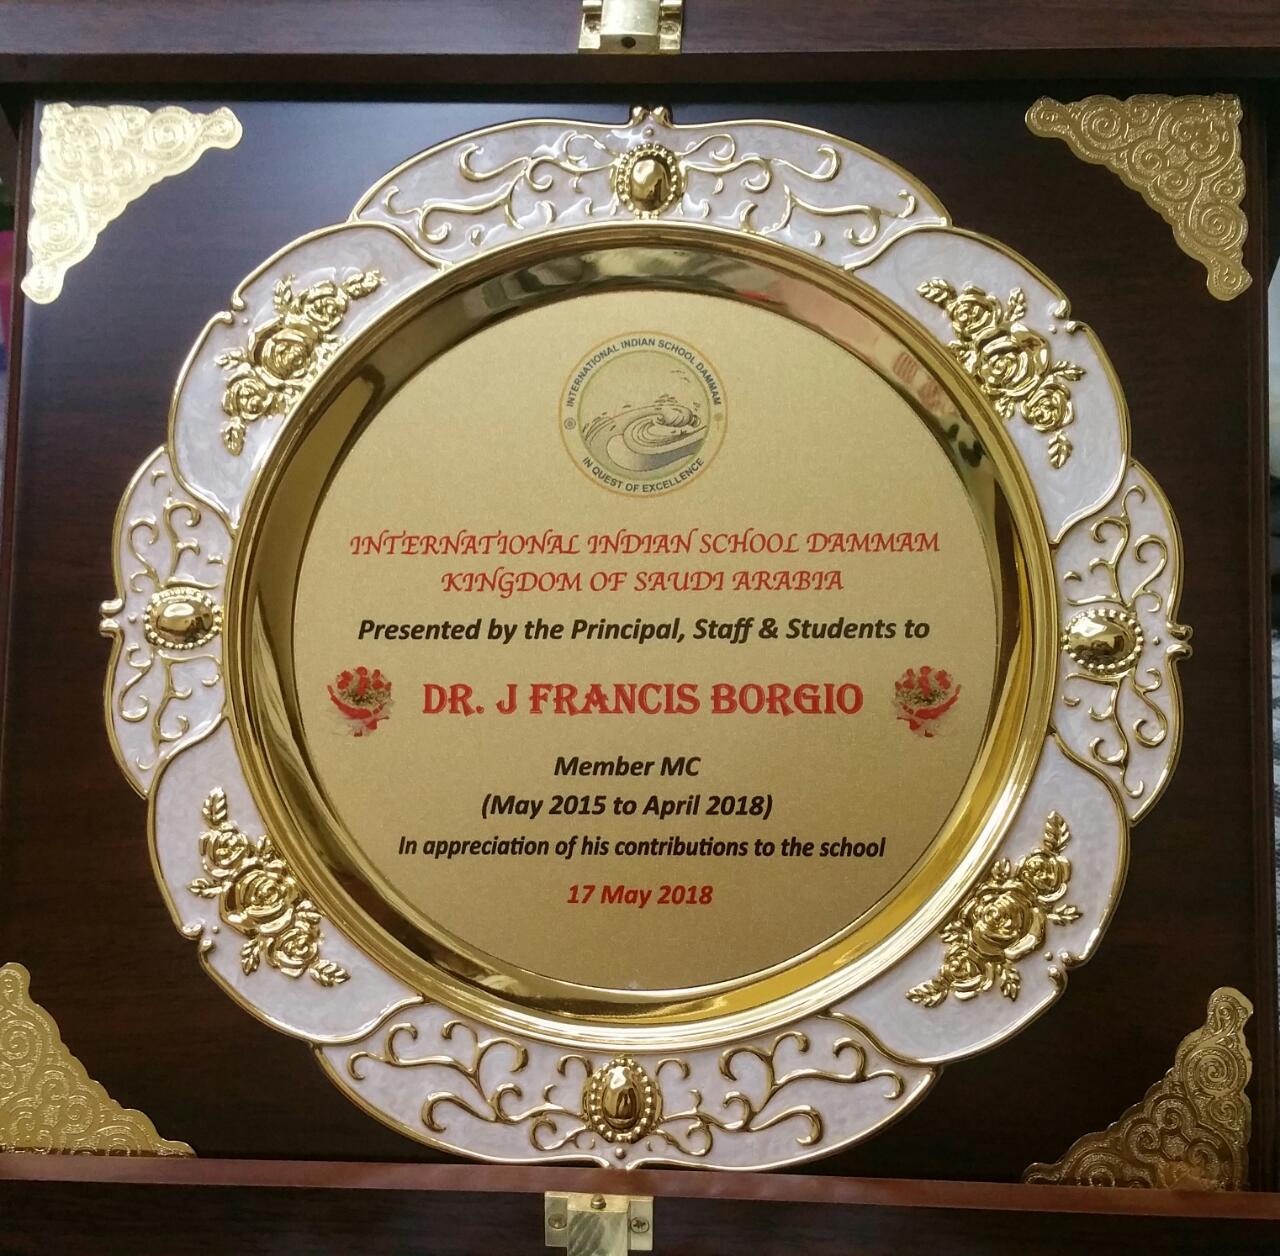 Appreciation received from International Indian School Dammam (IISD), Dammam